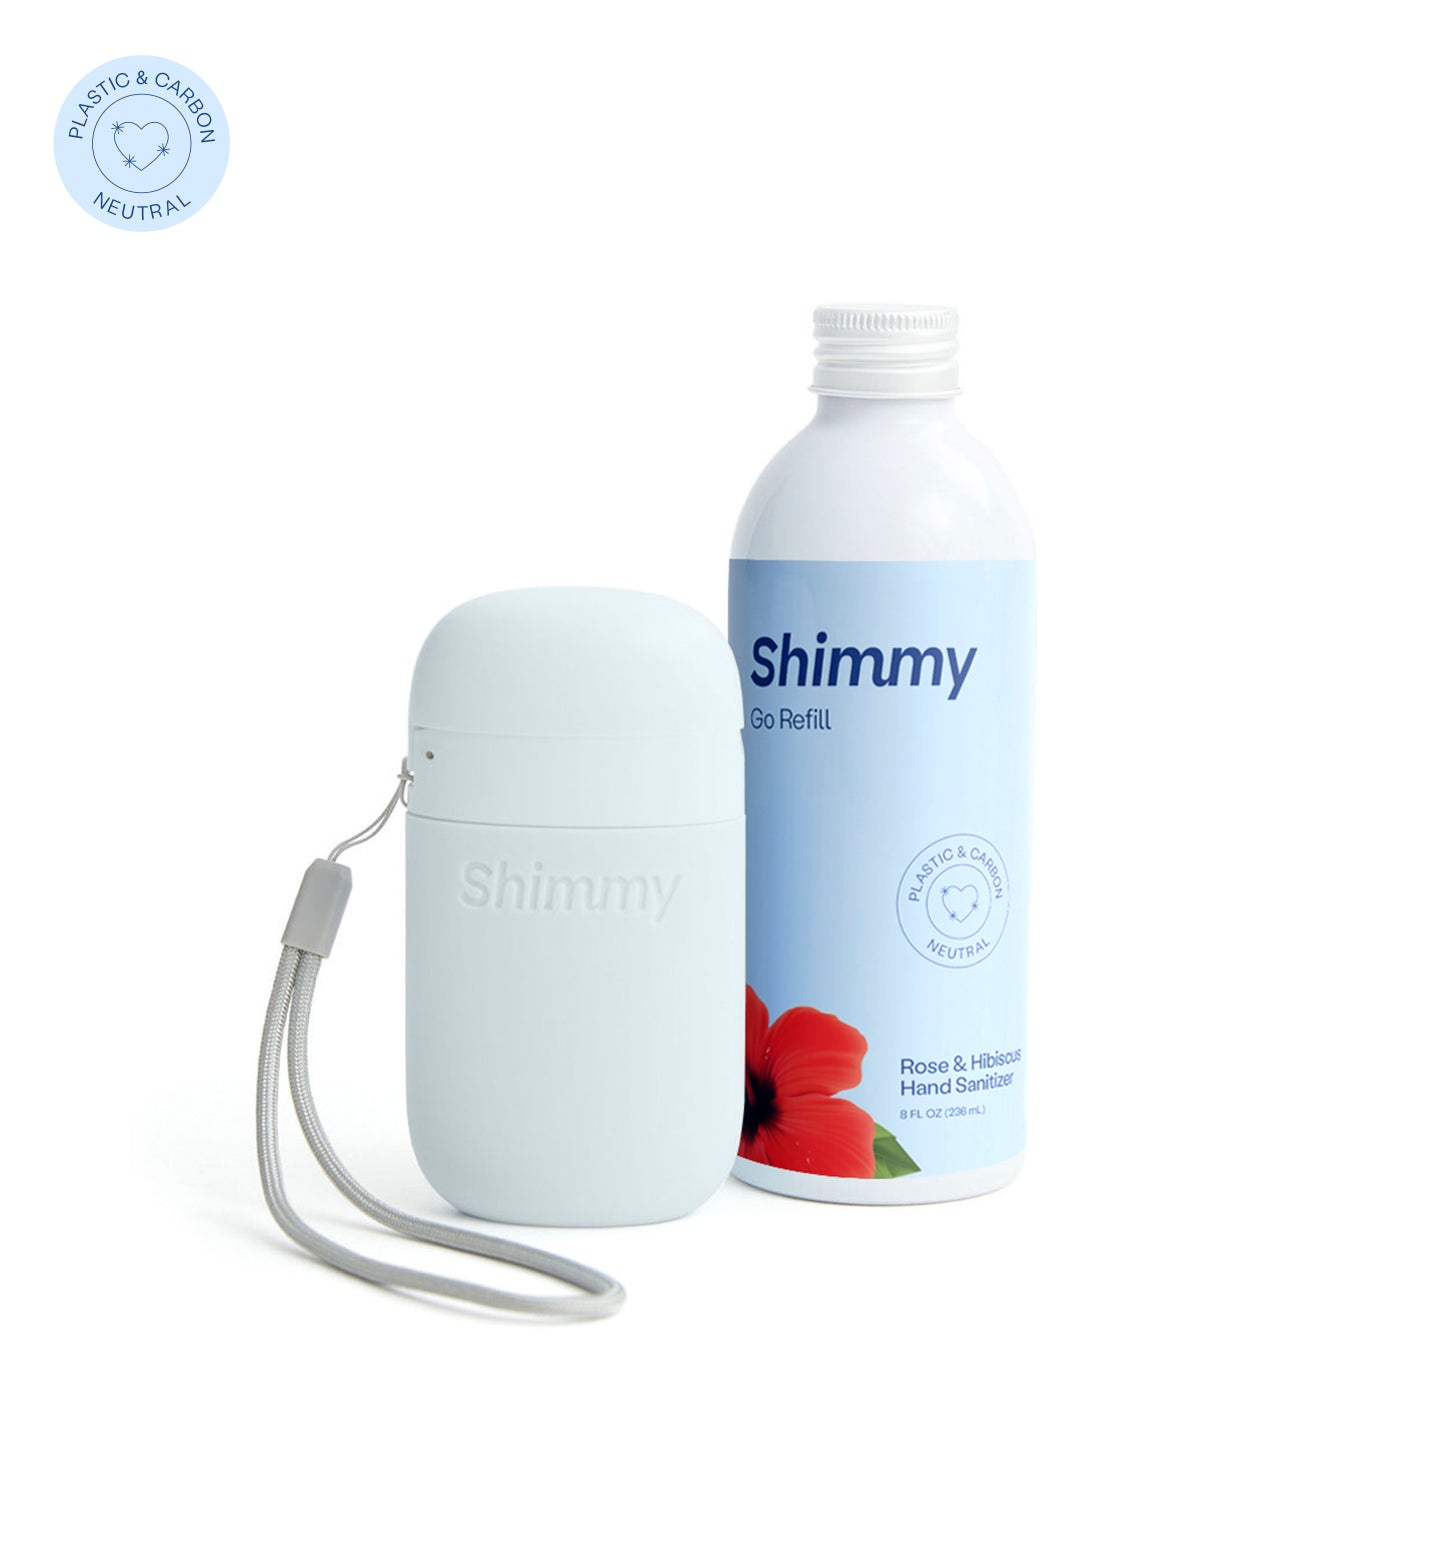 Shimmy Go Portable Hand Sanitizer Dispenser Soft Blue + Rose & Hibiscus Hand Sanitizer [40734812373183] - 